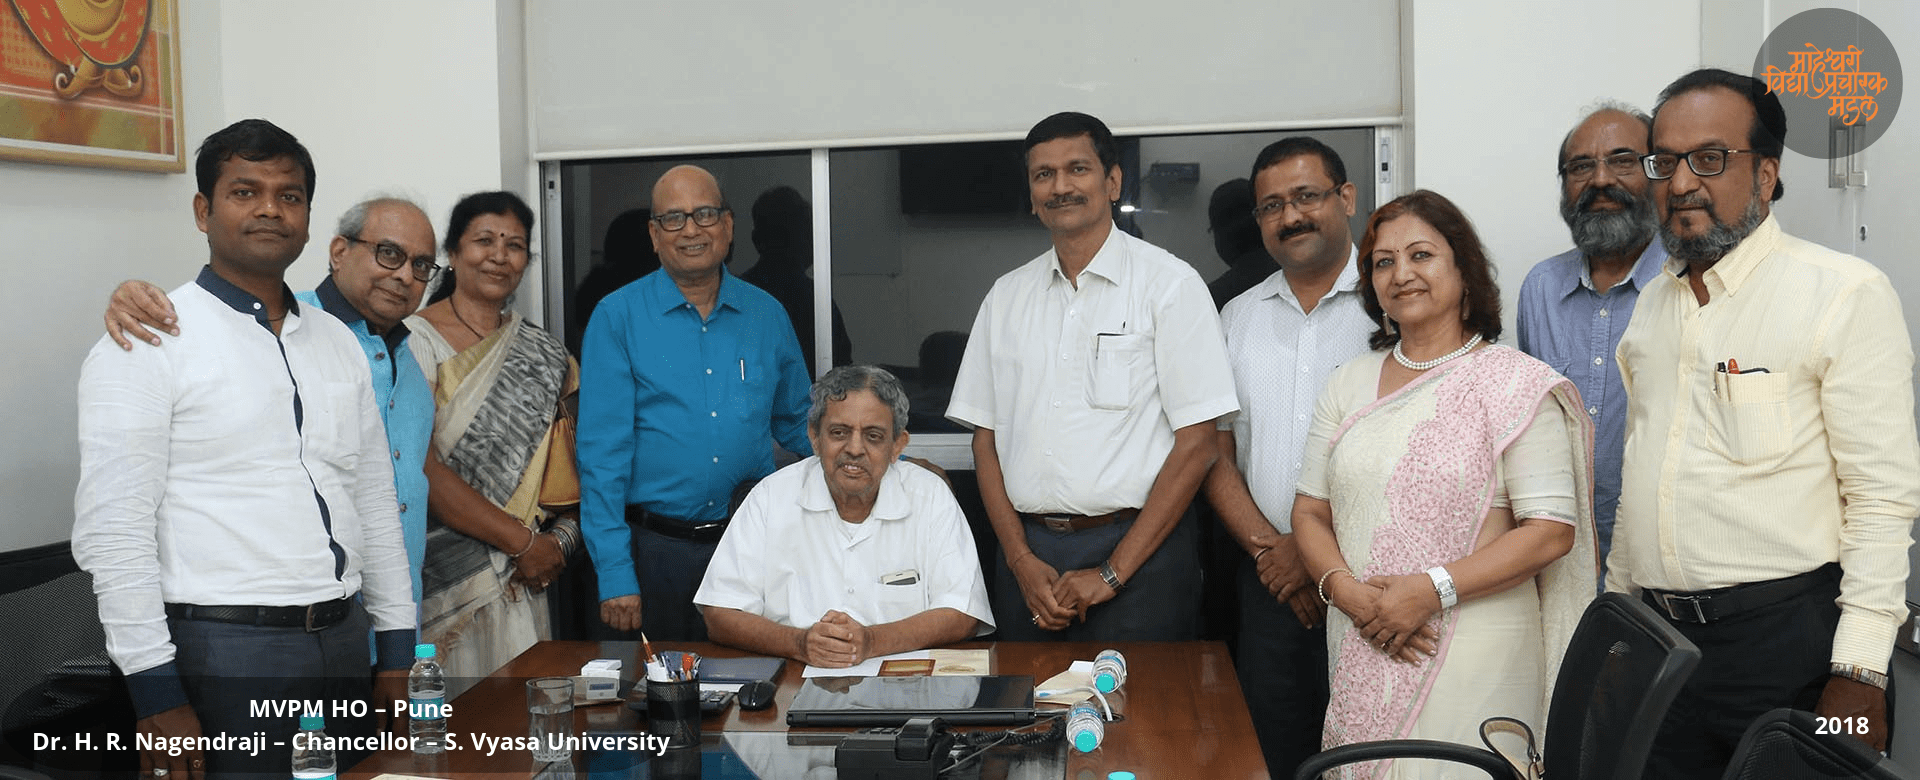 13.	MVPM HO – Pune Dr. H. R. Nagendraji – Chancellor – S. Vyasa University   2018